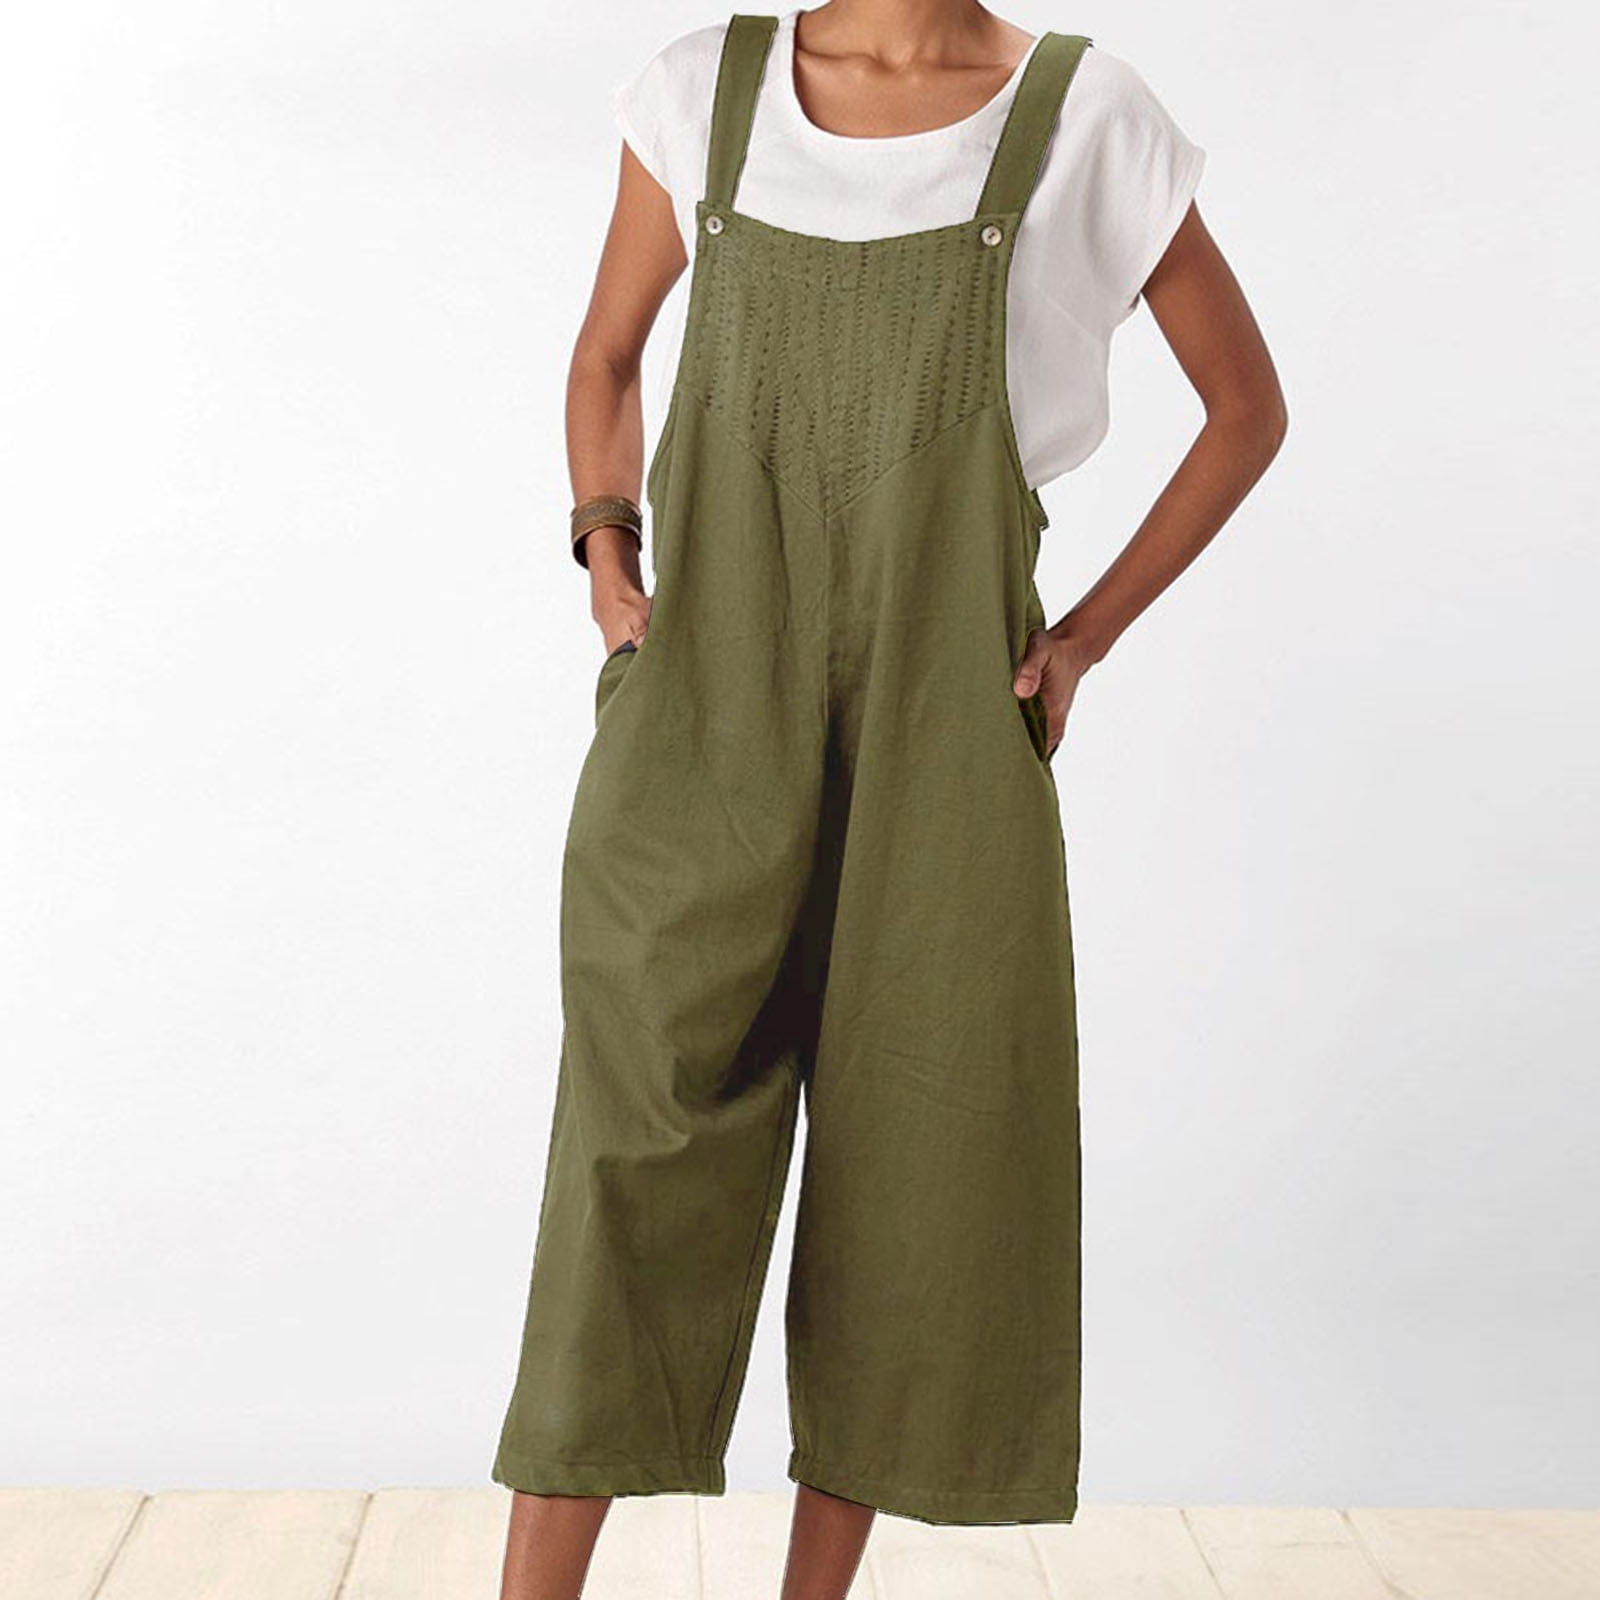 JNGSA Women Summer Wide Leg Jumpsuit Casual Plus Size Romper Pants Plain  One Piece Elegant Loose Trousers Suspender Overalls Army Green 